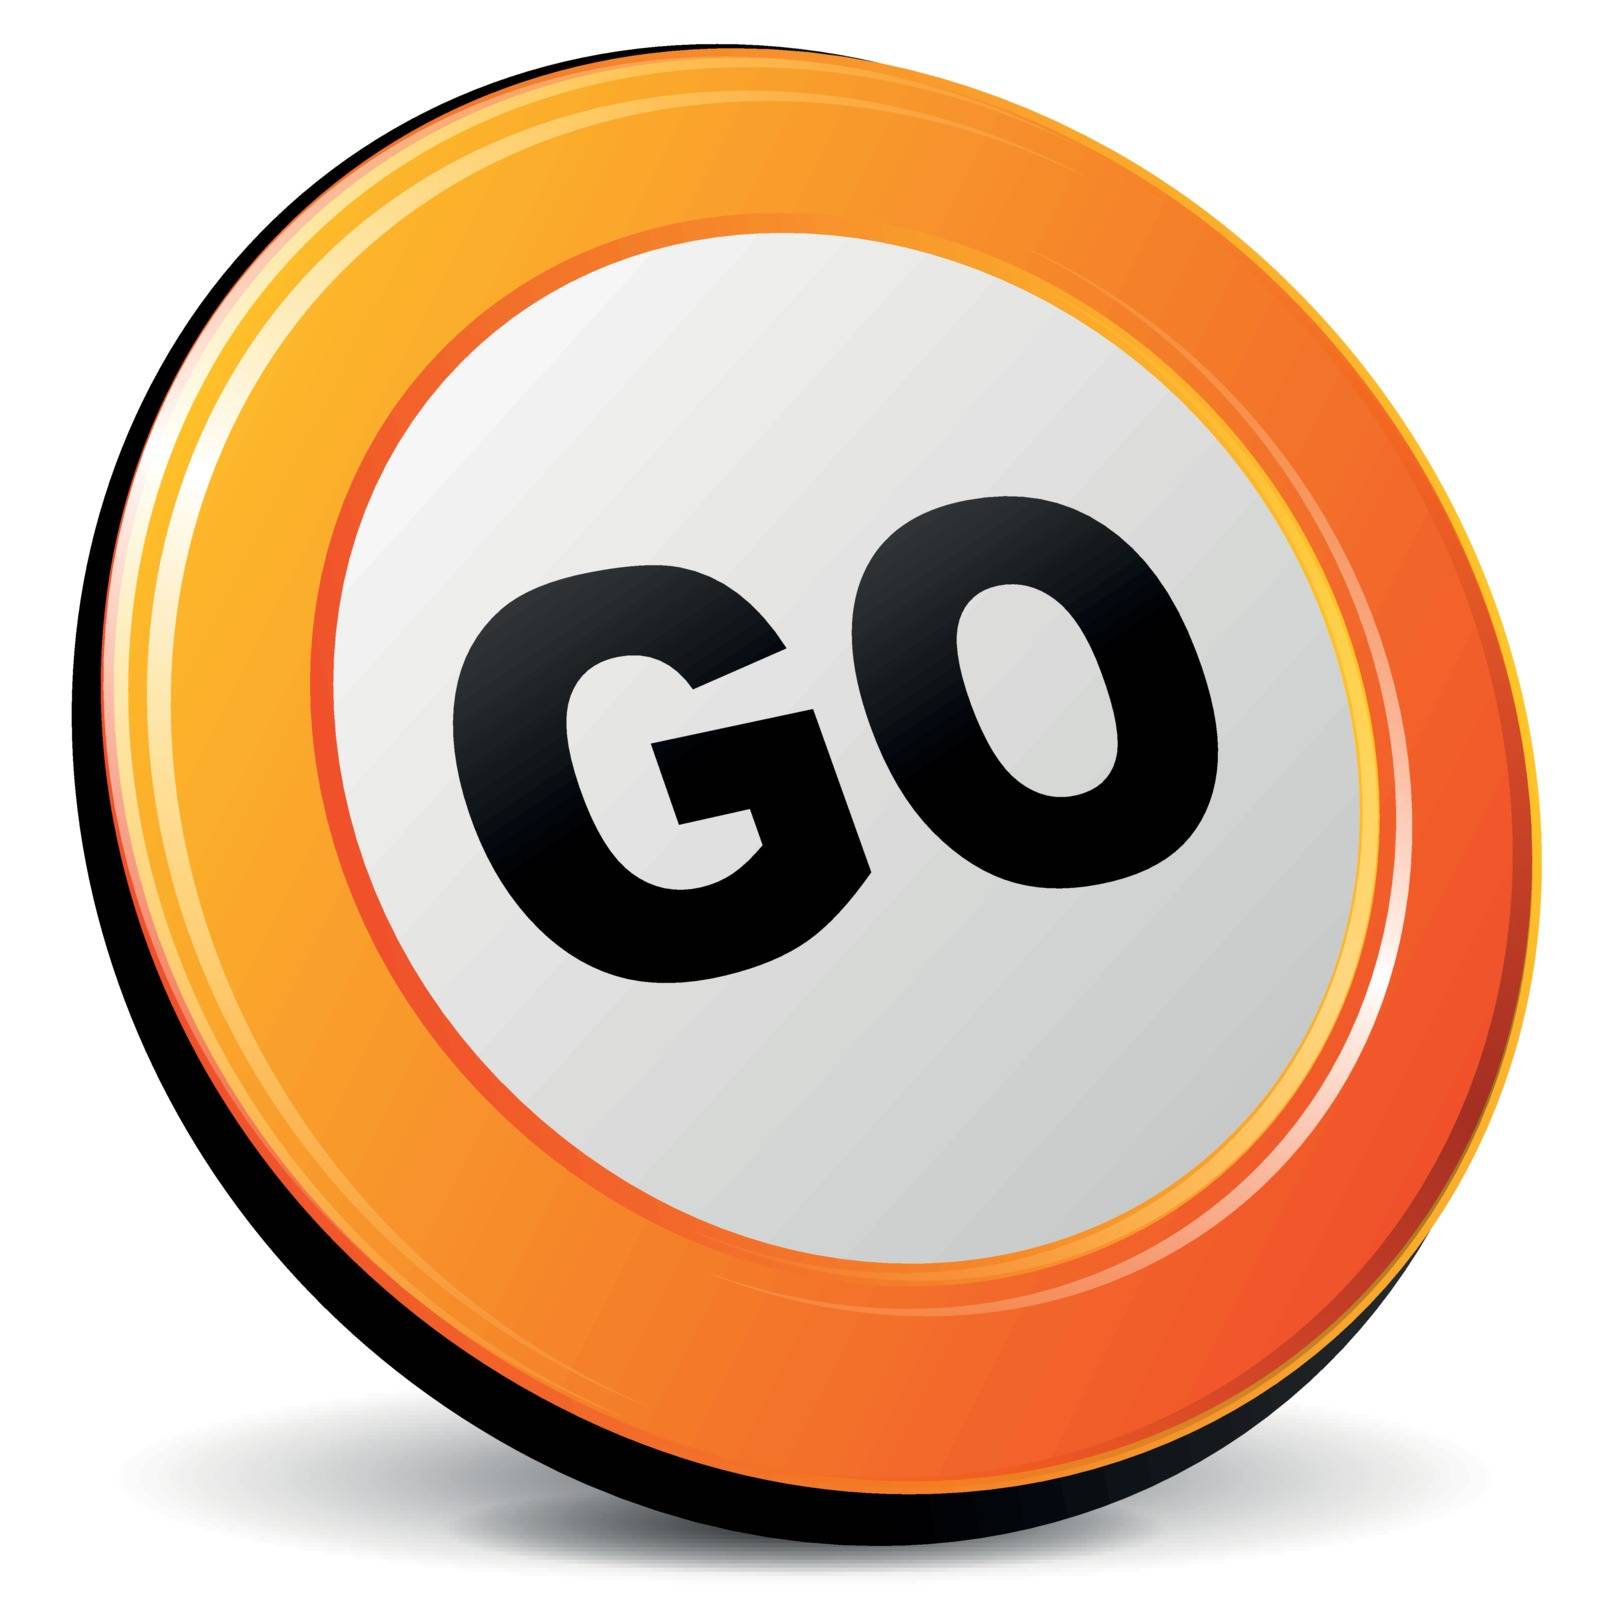 Vector illustration of orange 3d go icon